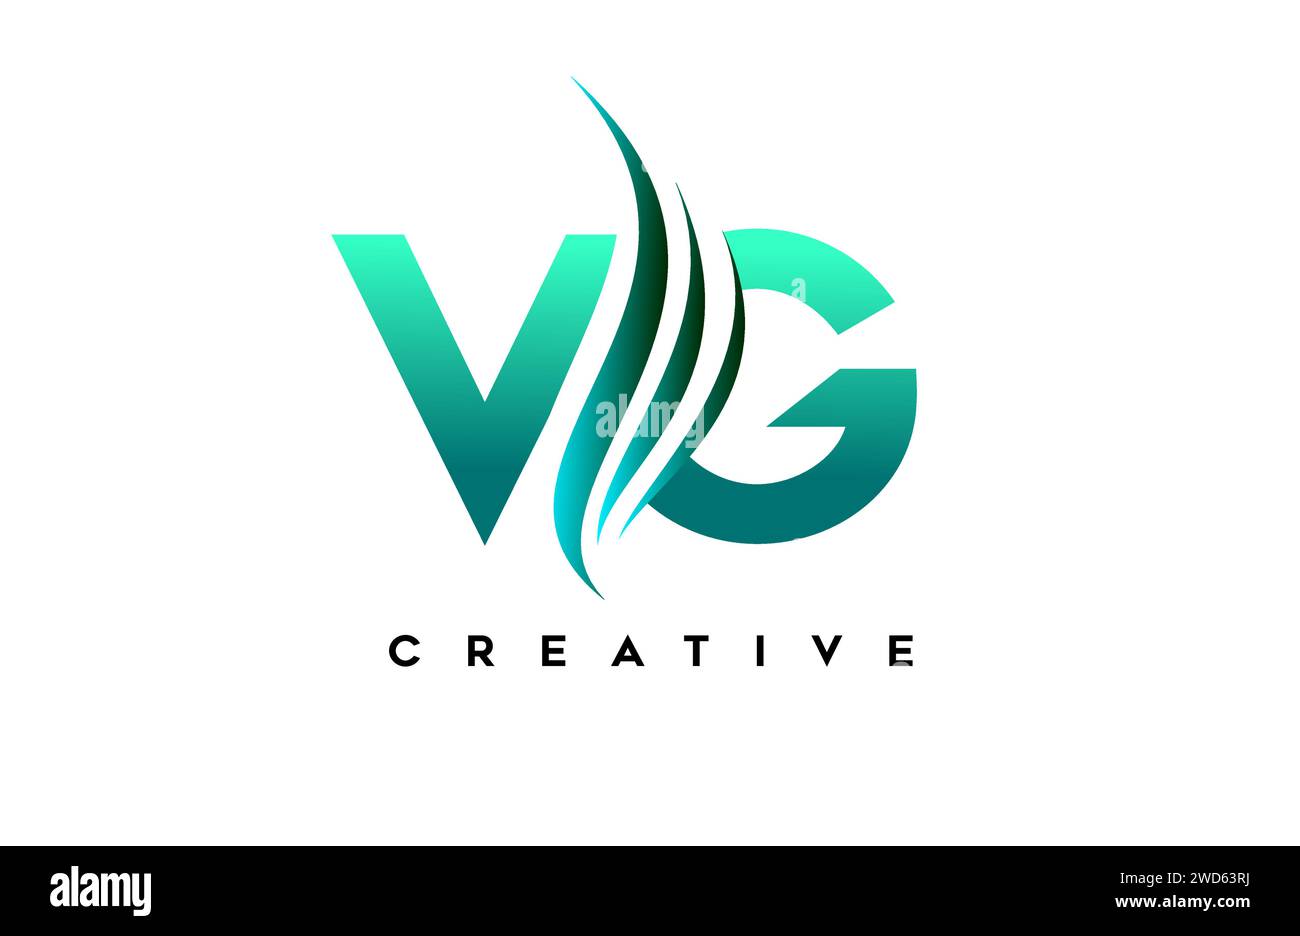 VG vg alphabet letter logo design idea concept for business or personal brand identity icon Vector Illustration. Stock Vector